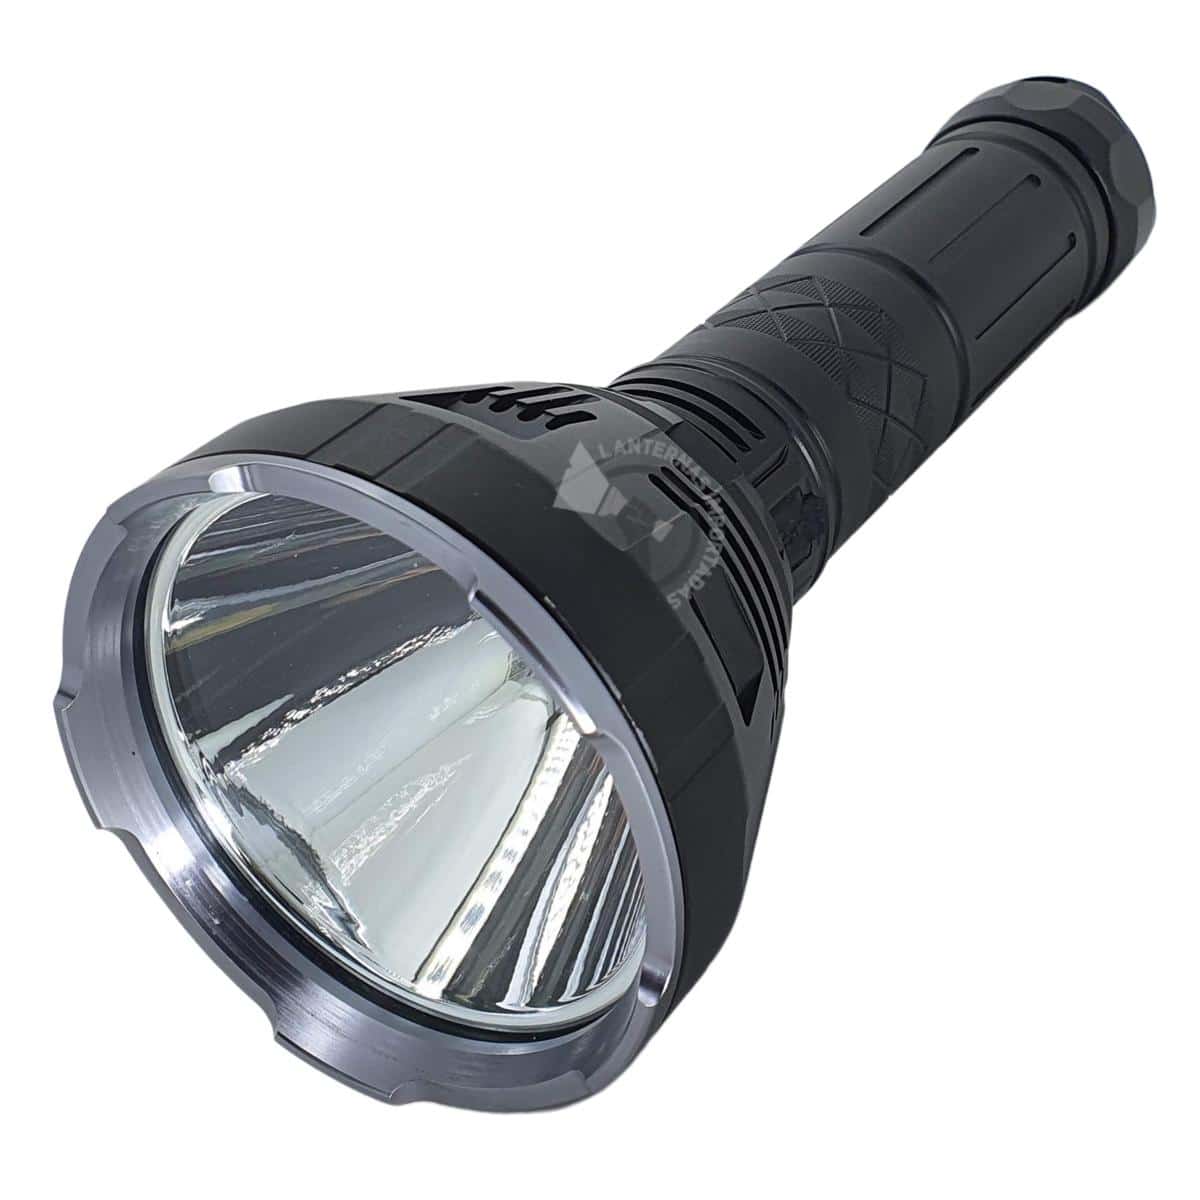 Lanterna LED Holofote Longo Alcance Recarregavel Super Potente